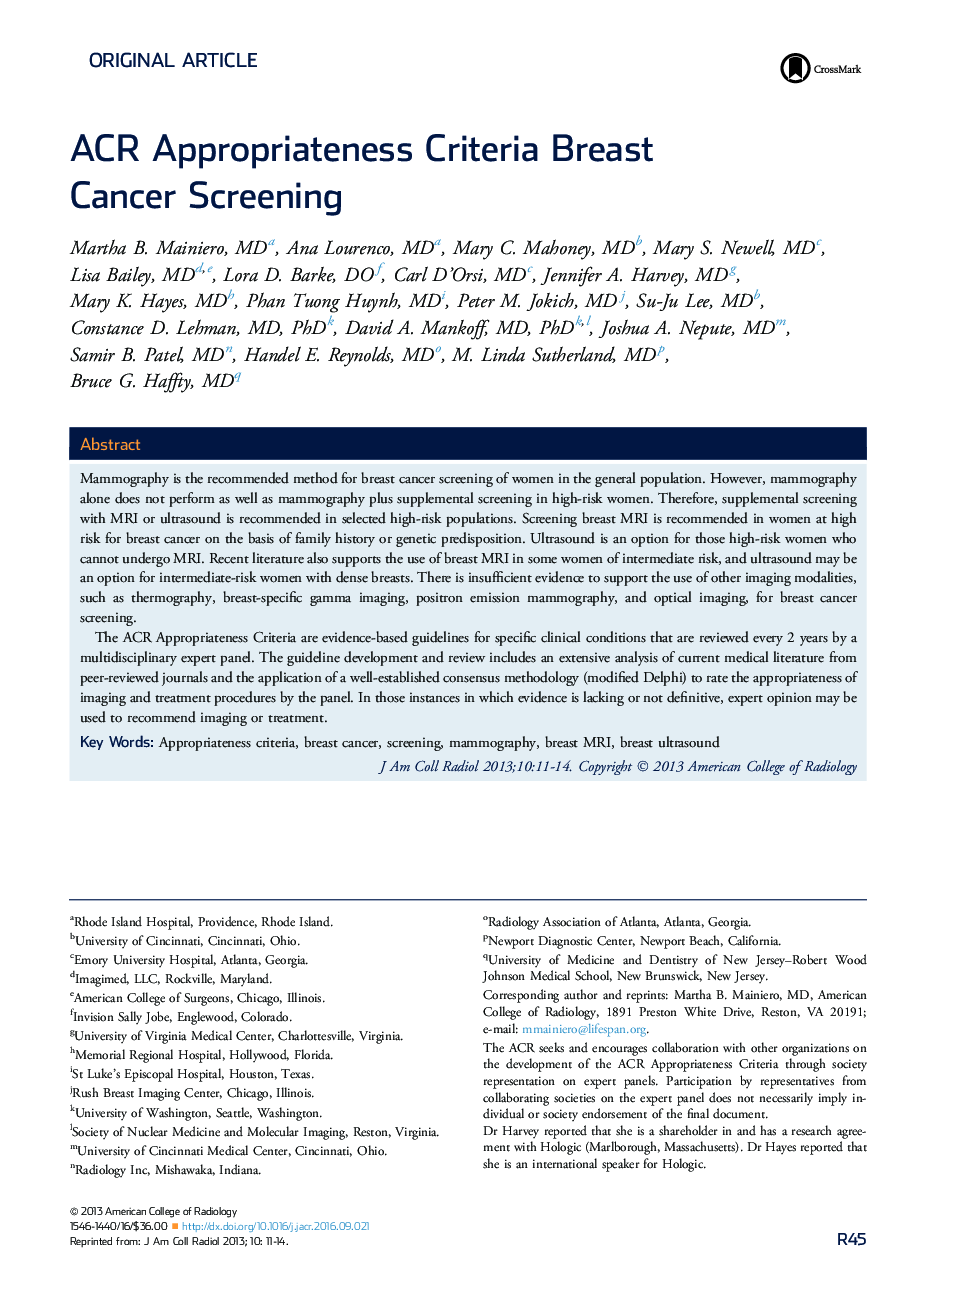 ACR Appropriateness Criteria Breast Cancer Screening